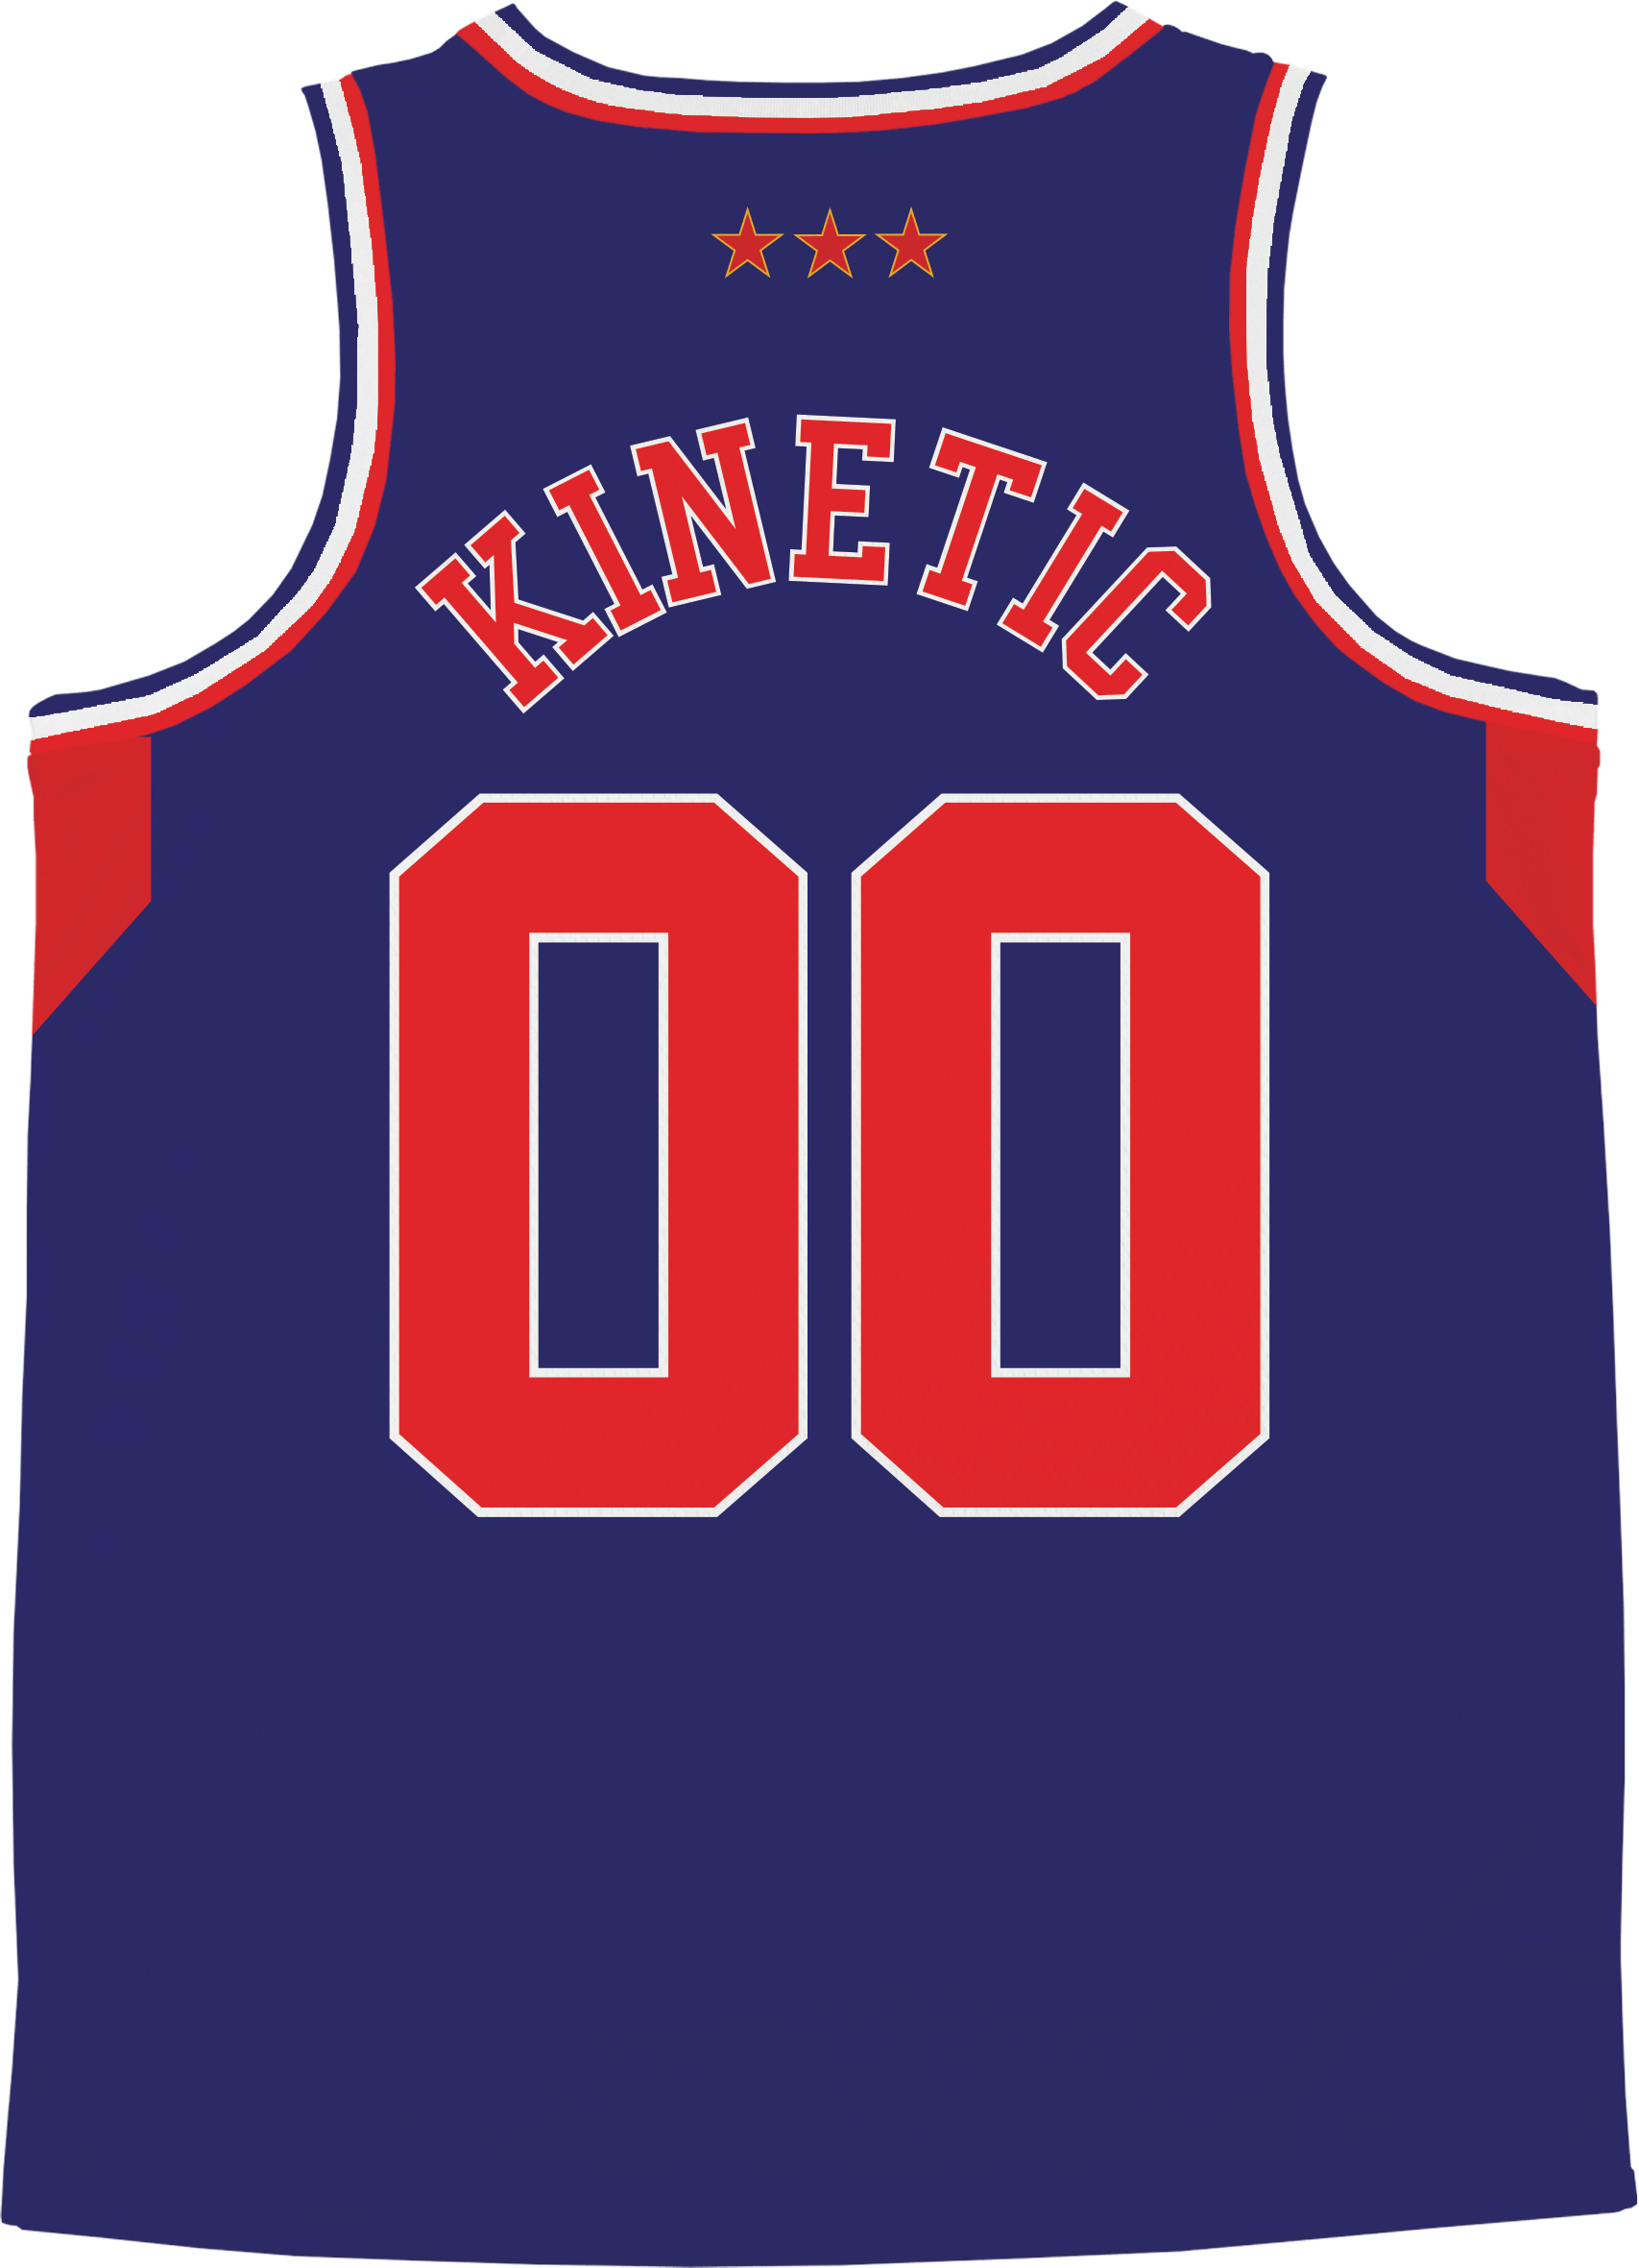 Phi Sigma Kappa - Retro Ballers Basketball Jersey - Kinetic Society